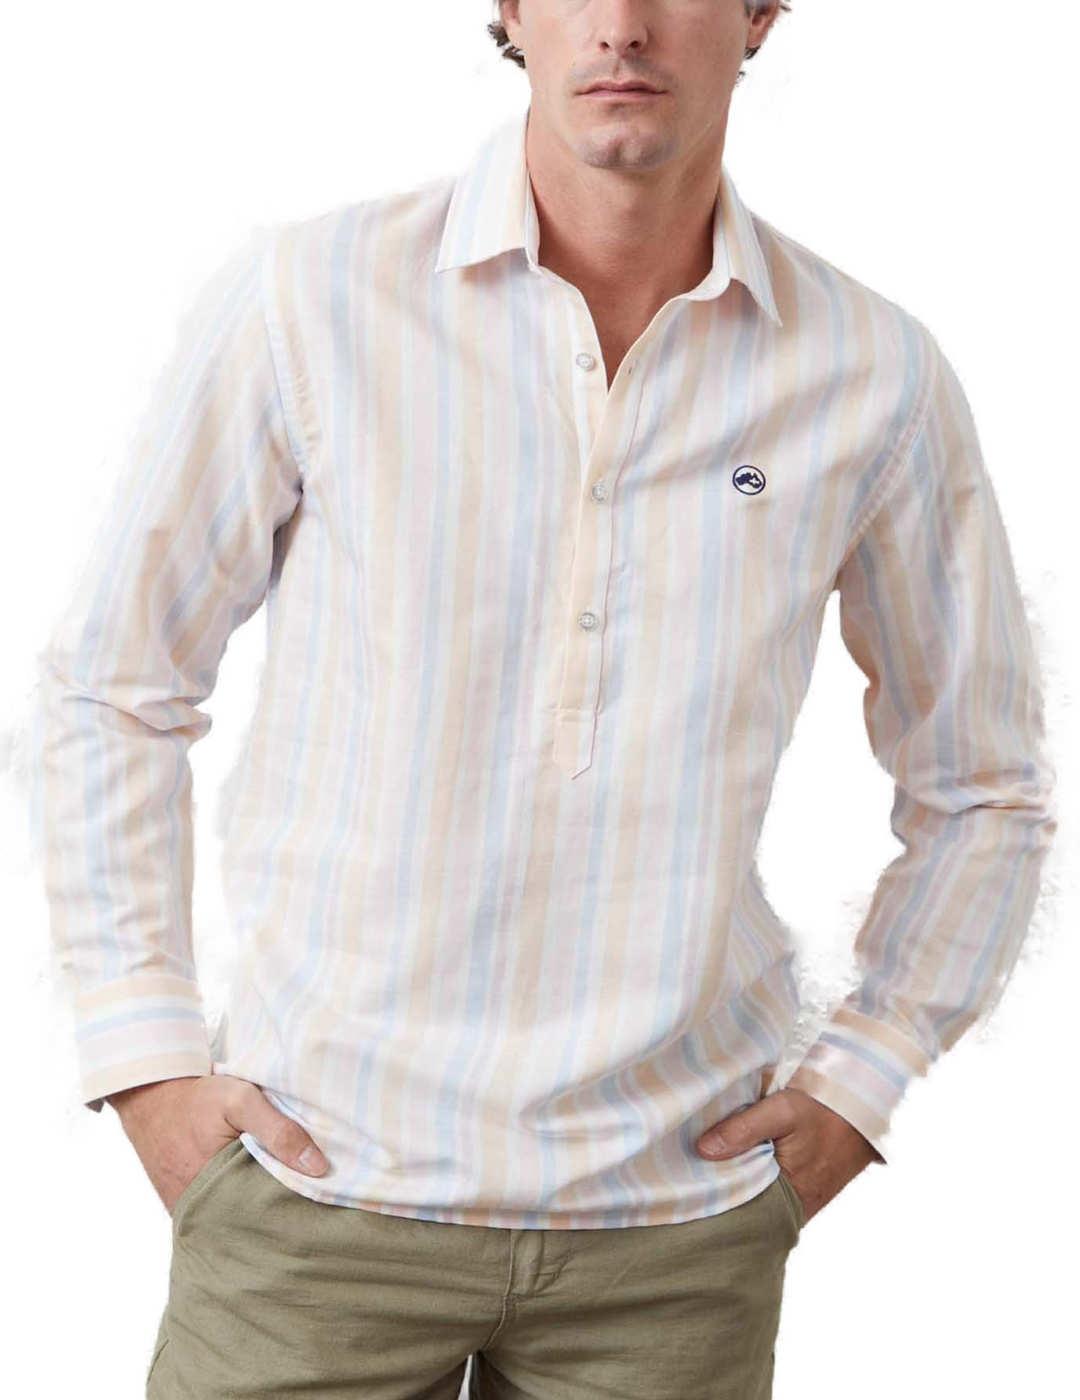 Camisa Altonadock blanca rayas manga larga para hombre